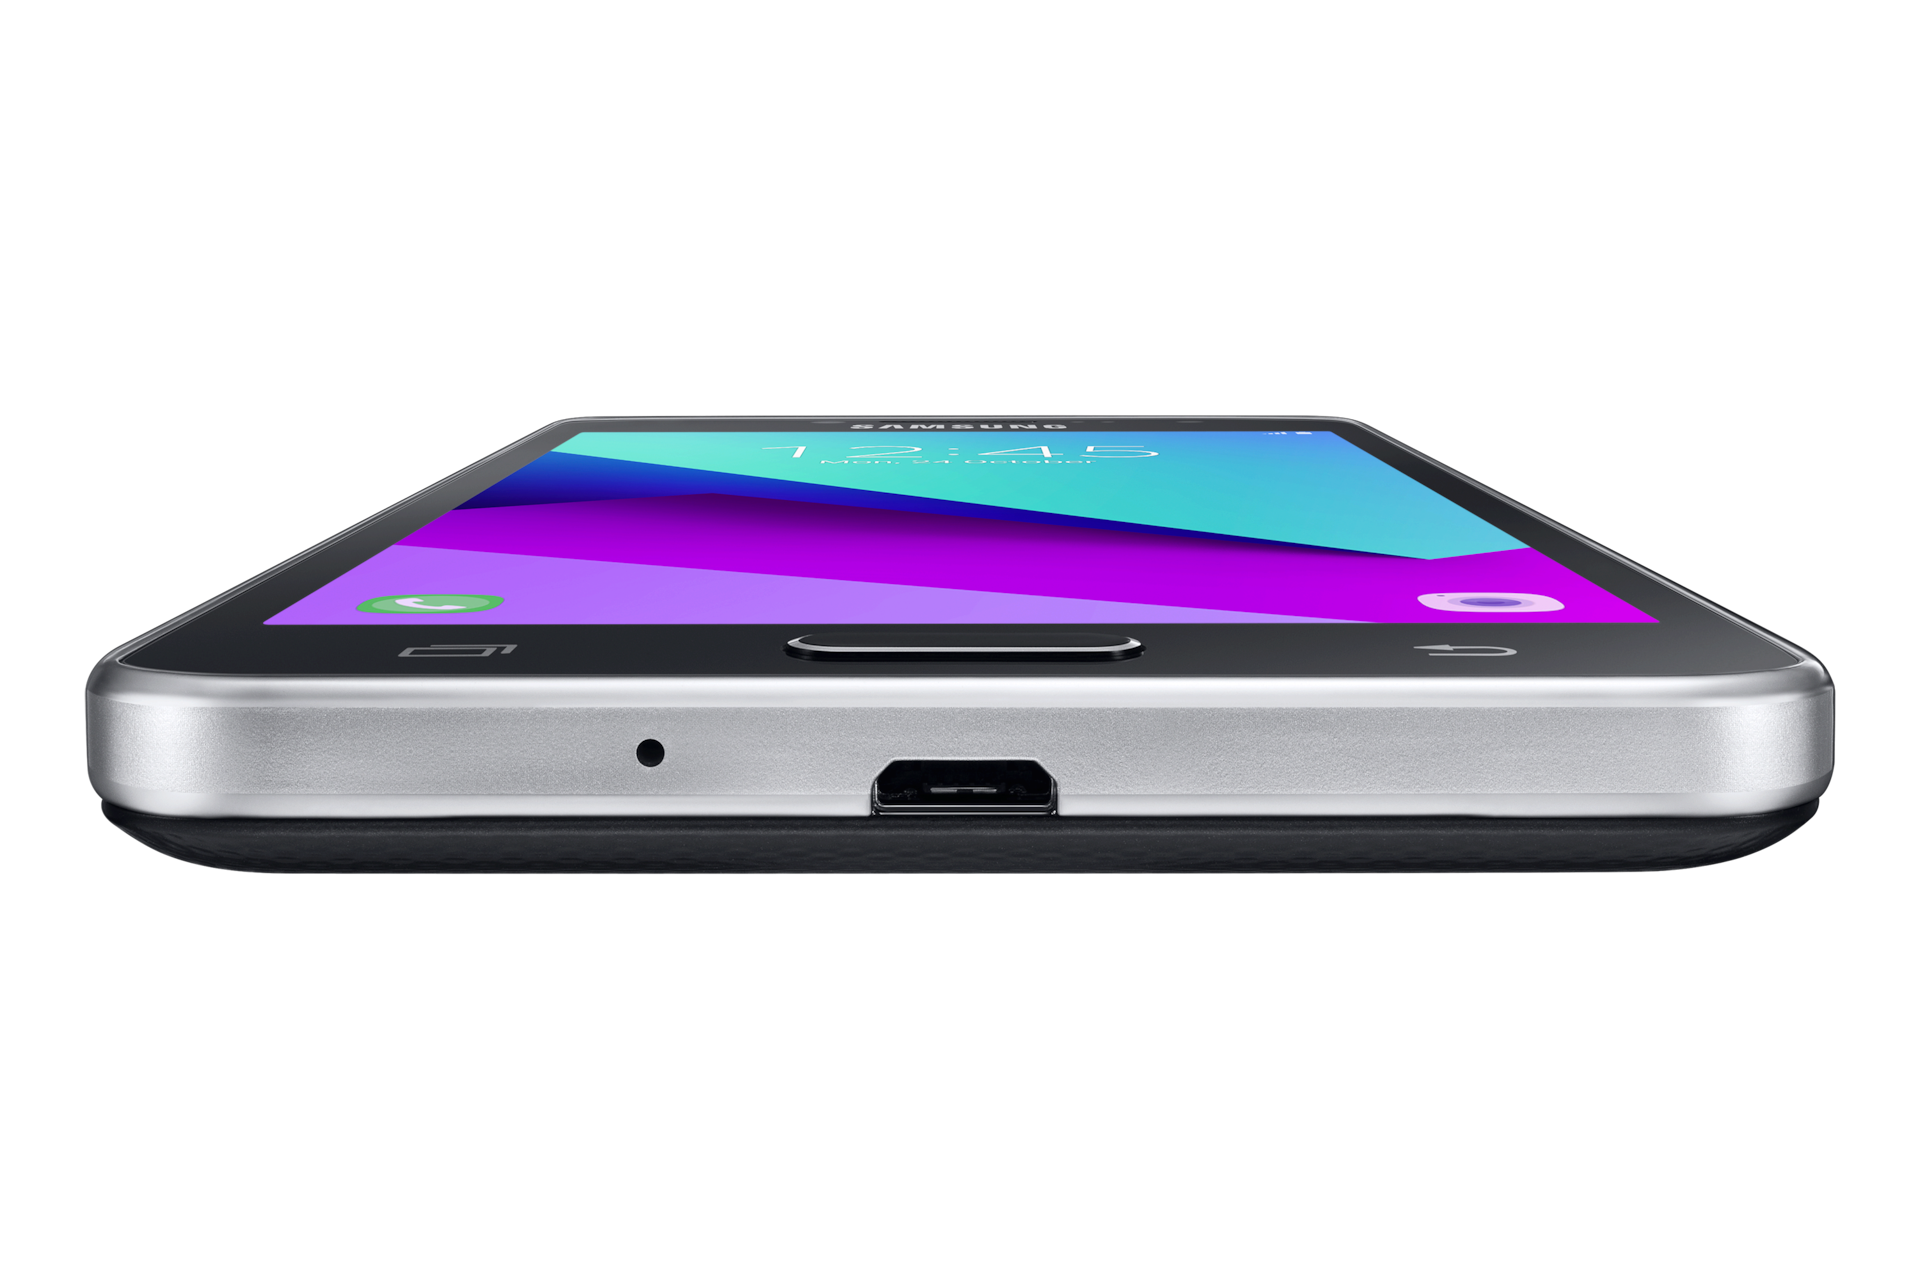 Samsung Galaxy J2 Prime (2016) Price in Malaysia, Specs ...